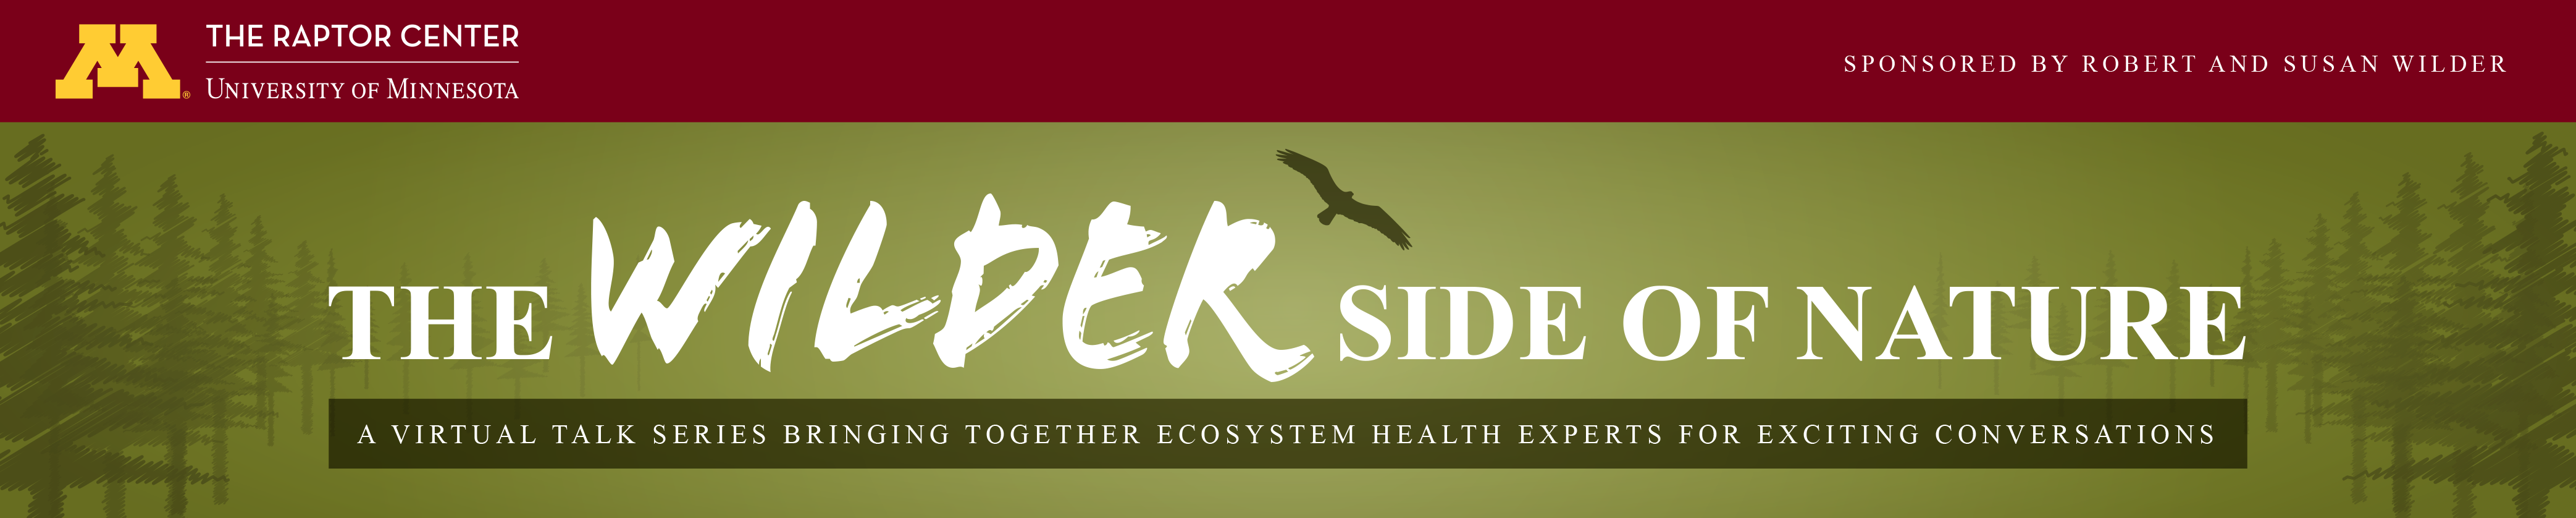 Wilder Side of Nature banner